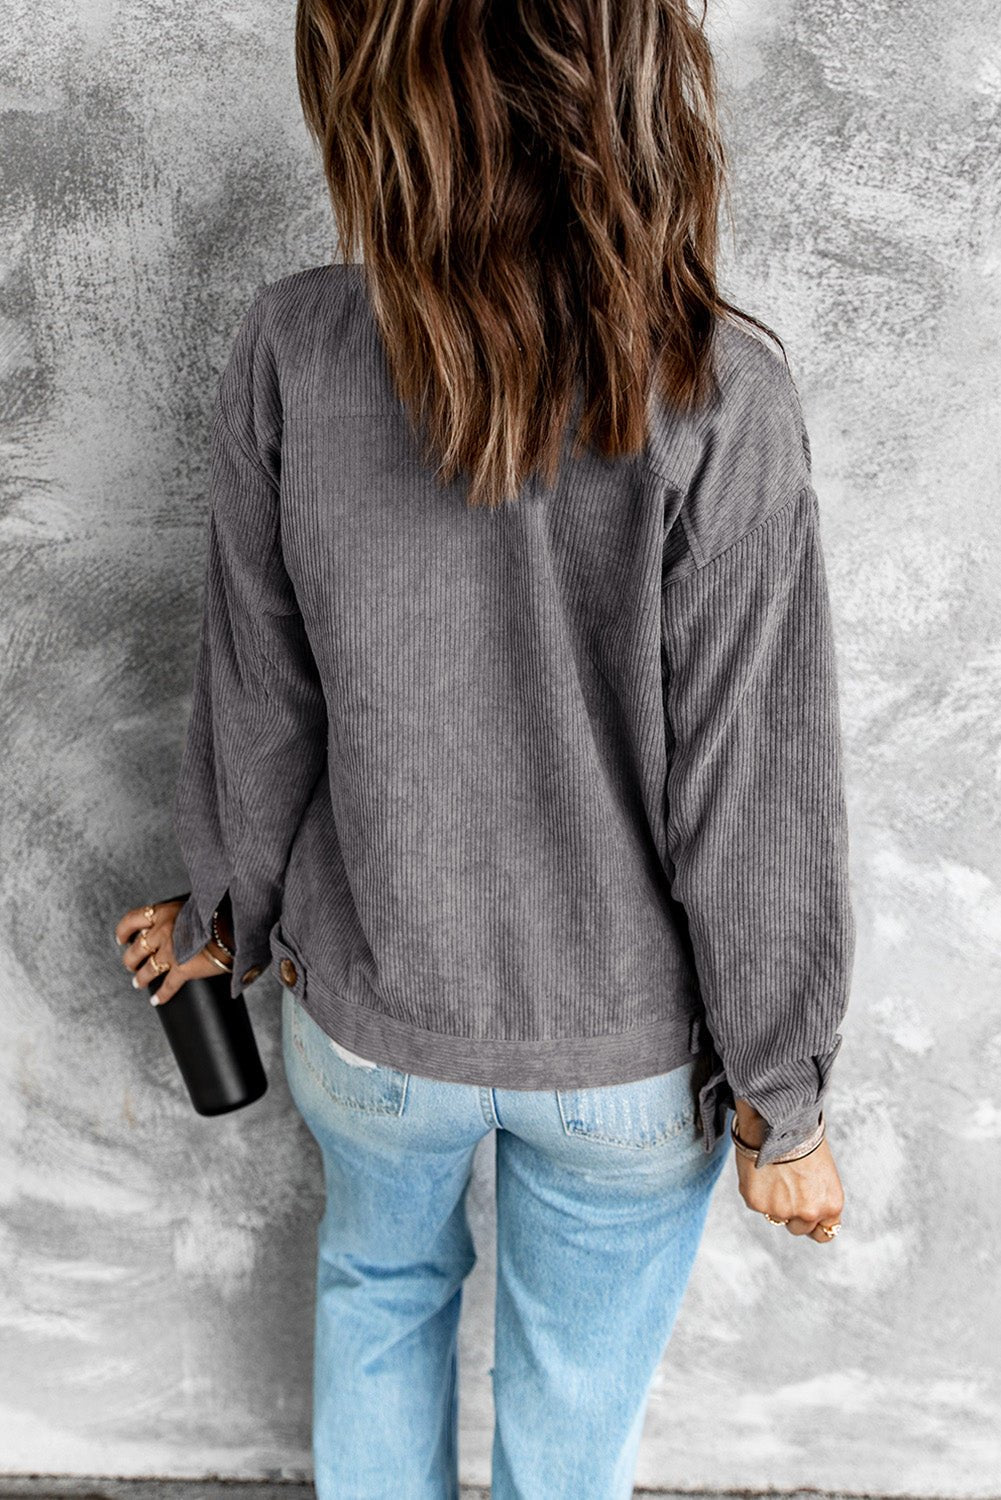 Corduroy Long Sleeve Jacket - Fashion Girl Online Store